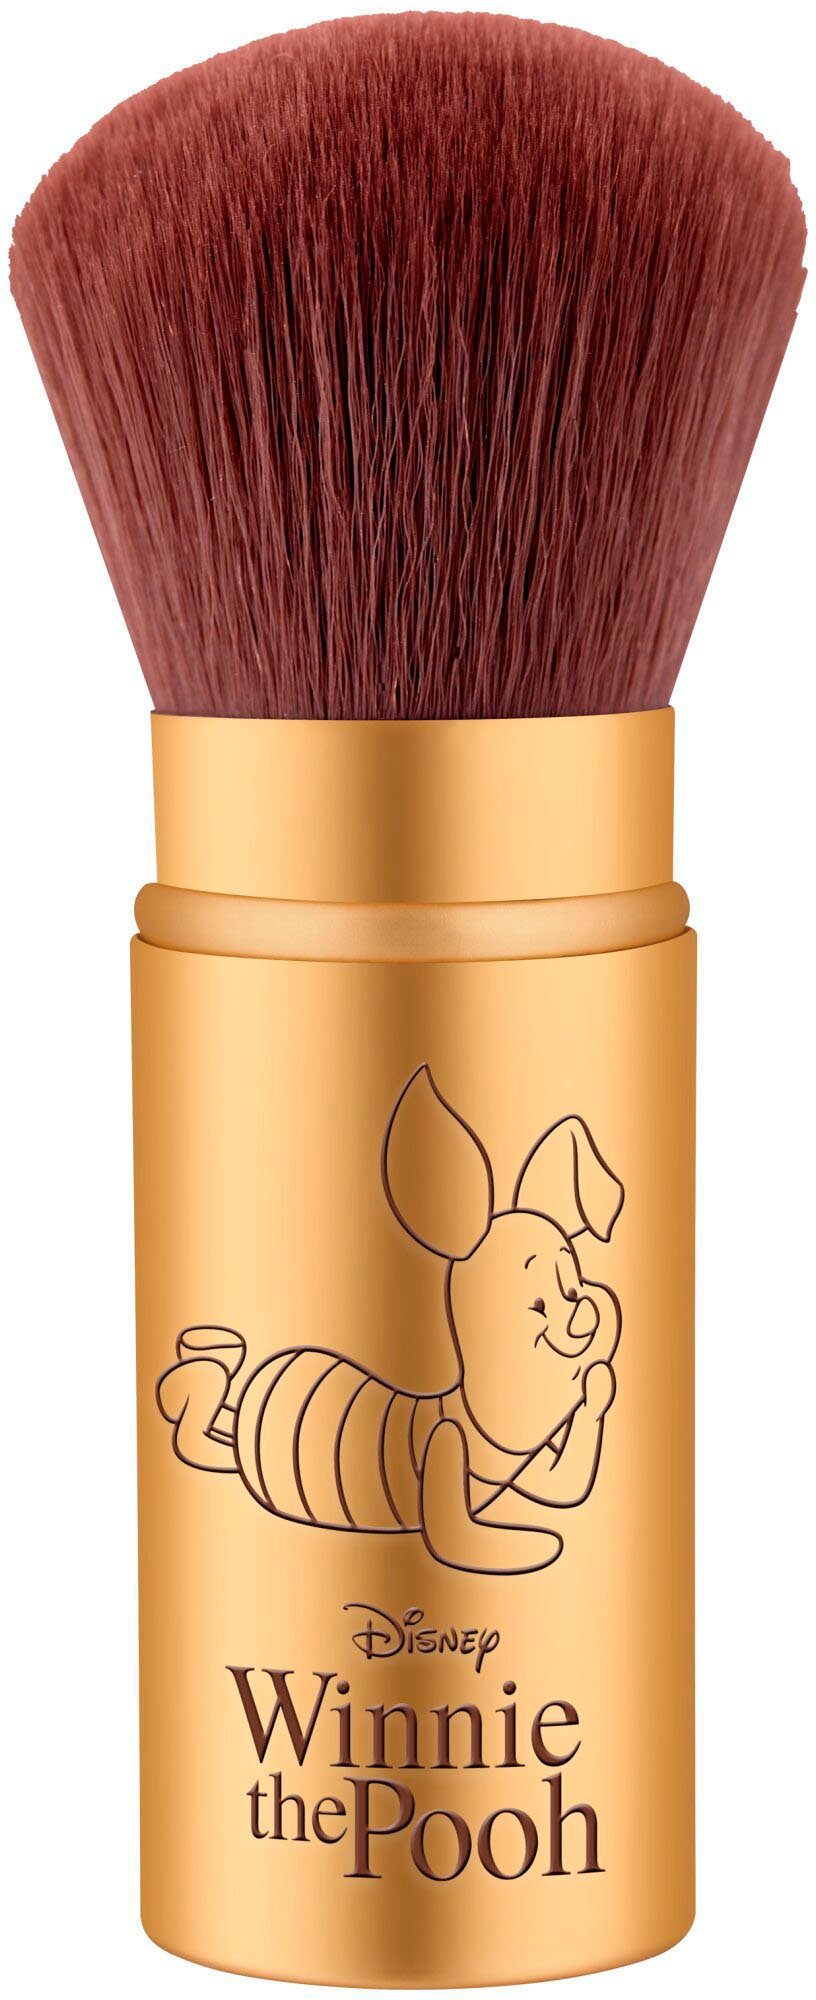 Winnie Disney 4 Brush, Pooh Puderpinsel Catrice the Kabuki